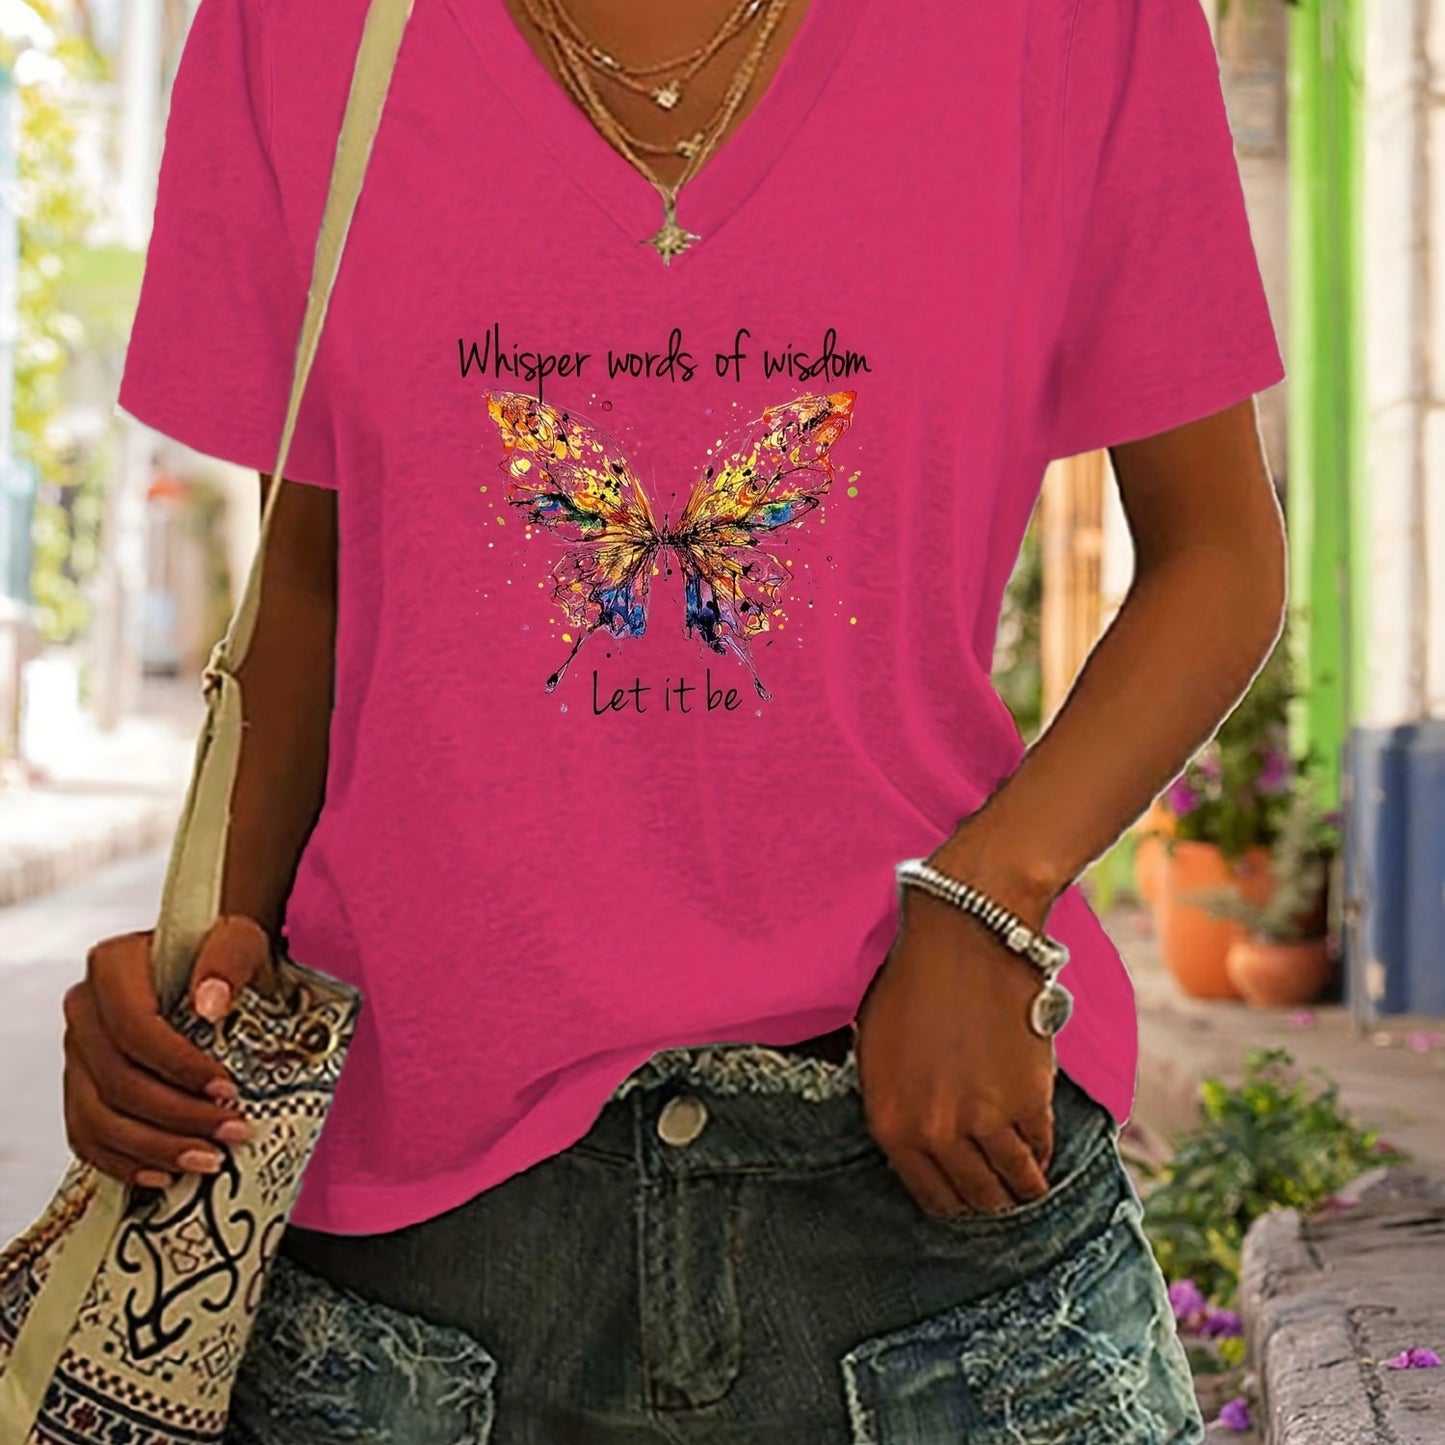 Vzyzv Letter & Butterfly Print T-Shirt, V Neck Short Sleeve T-Shirt, Casual Every Day Tops, Women's Clothing